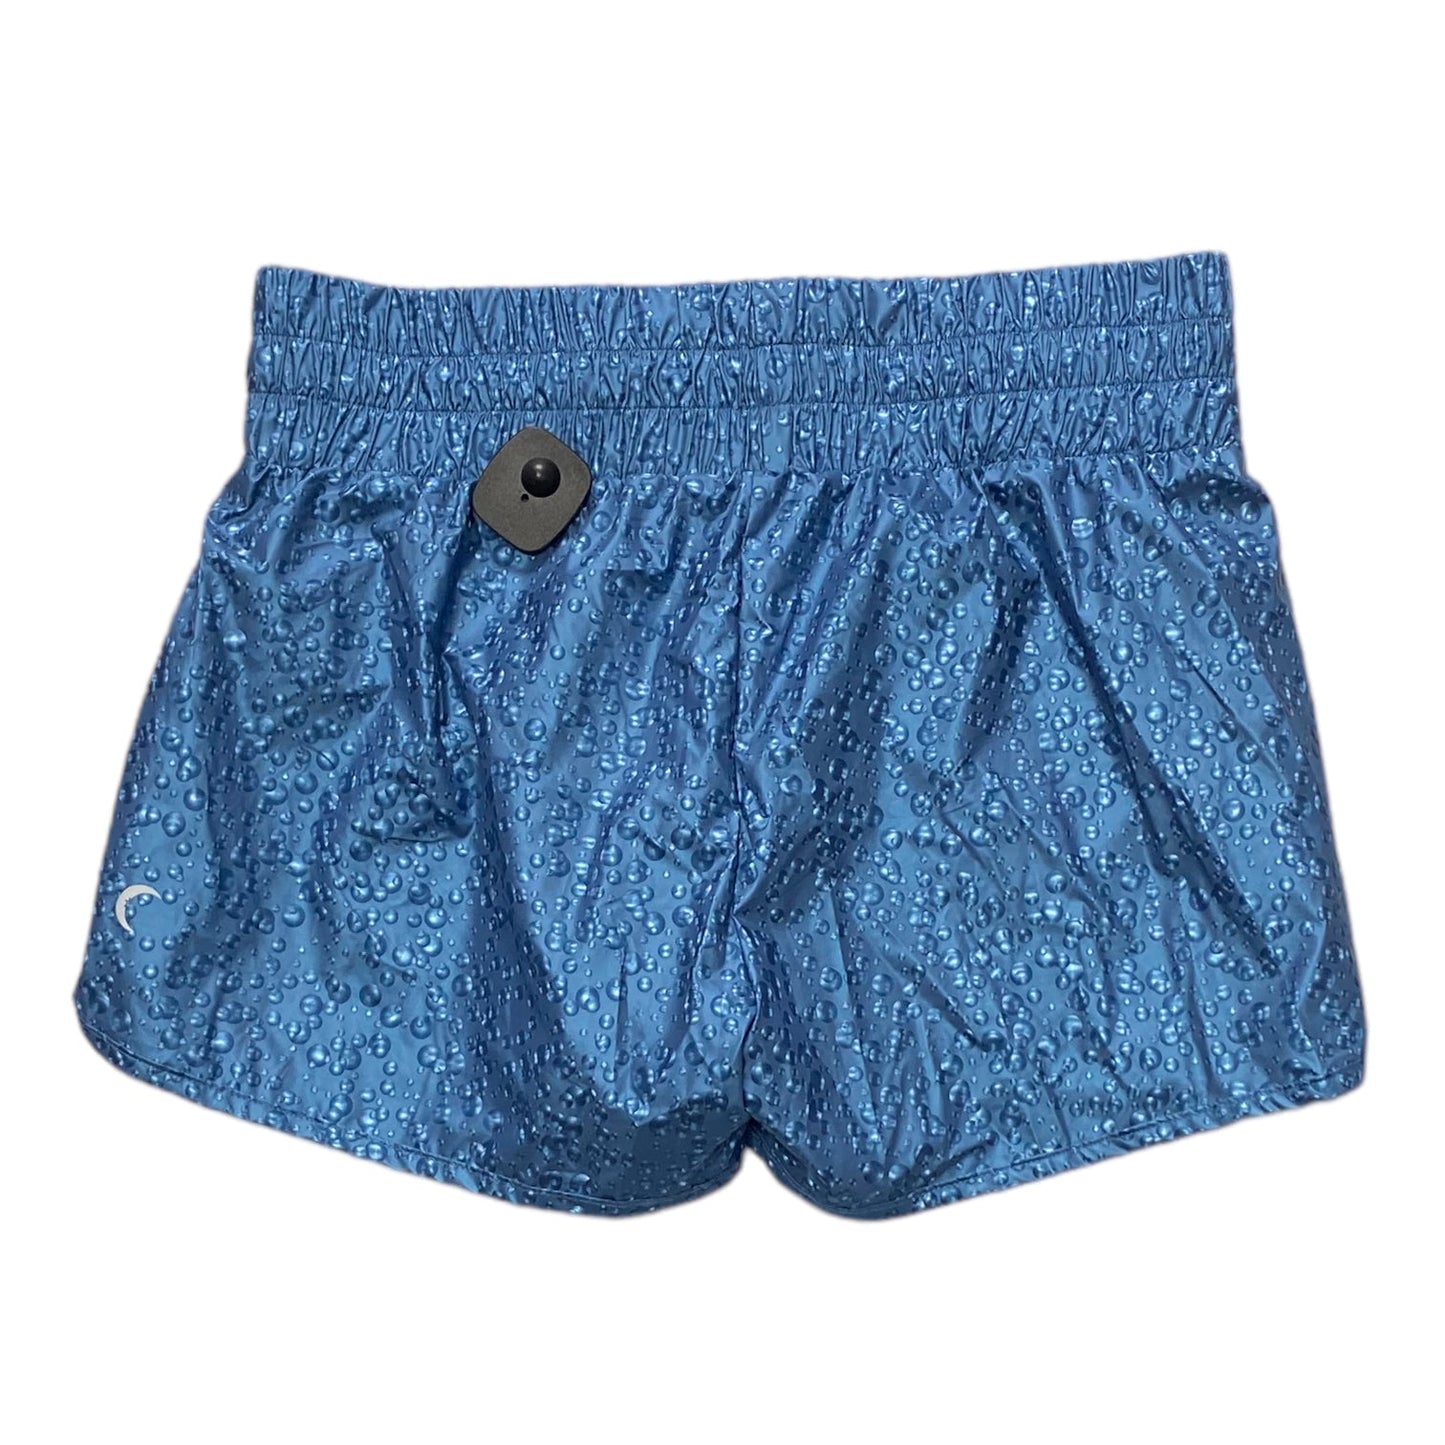 Blue Athletic Shorts Zyia, Size L